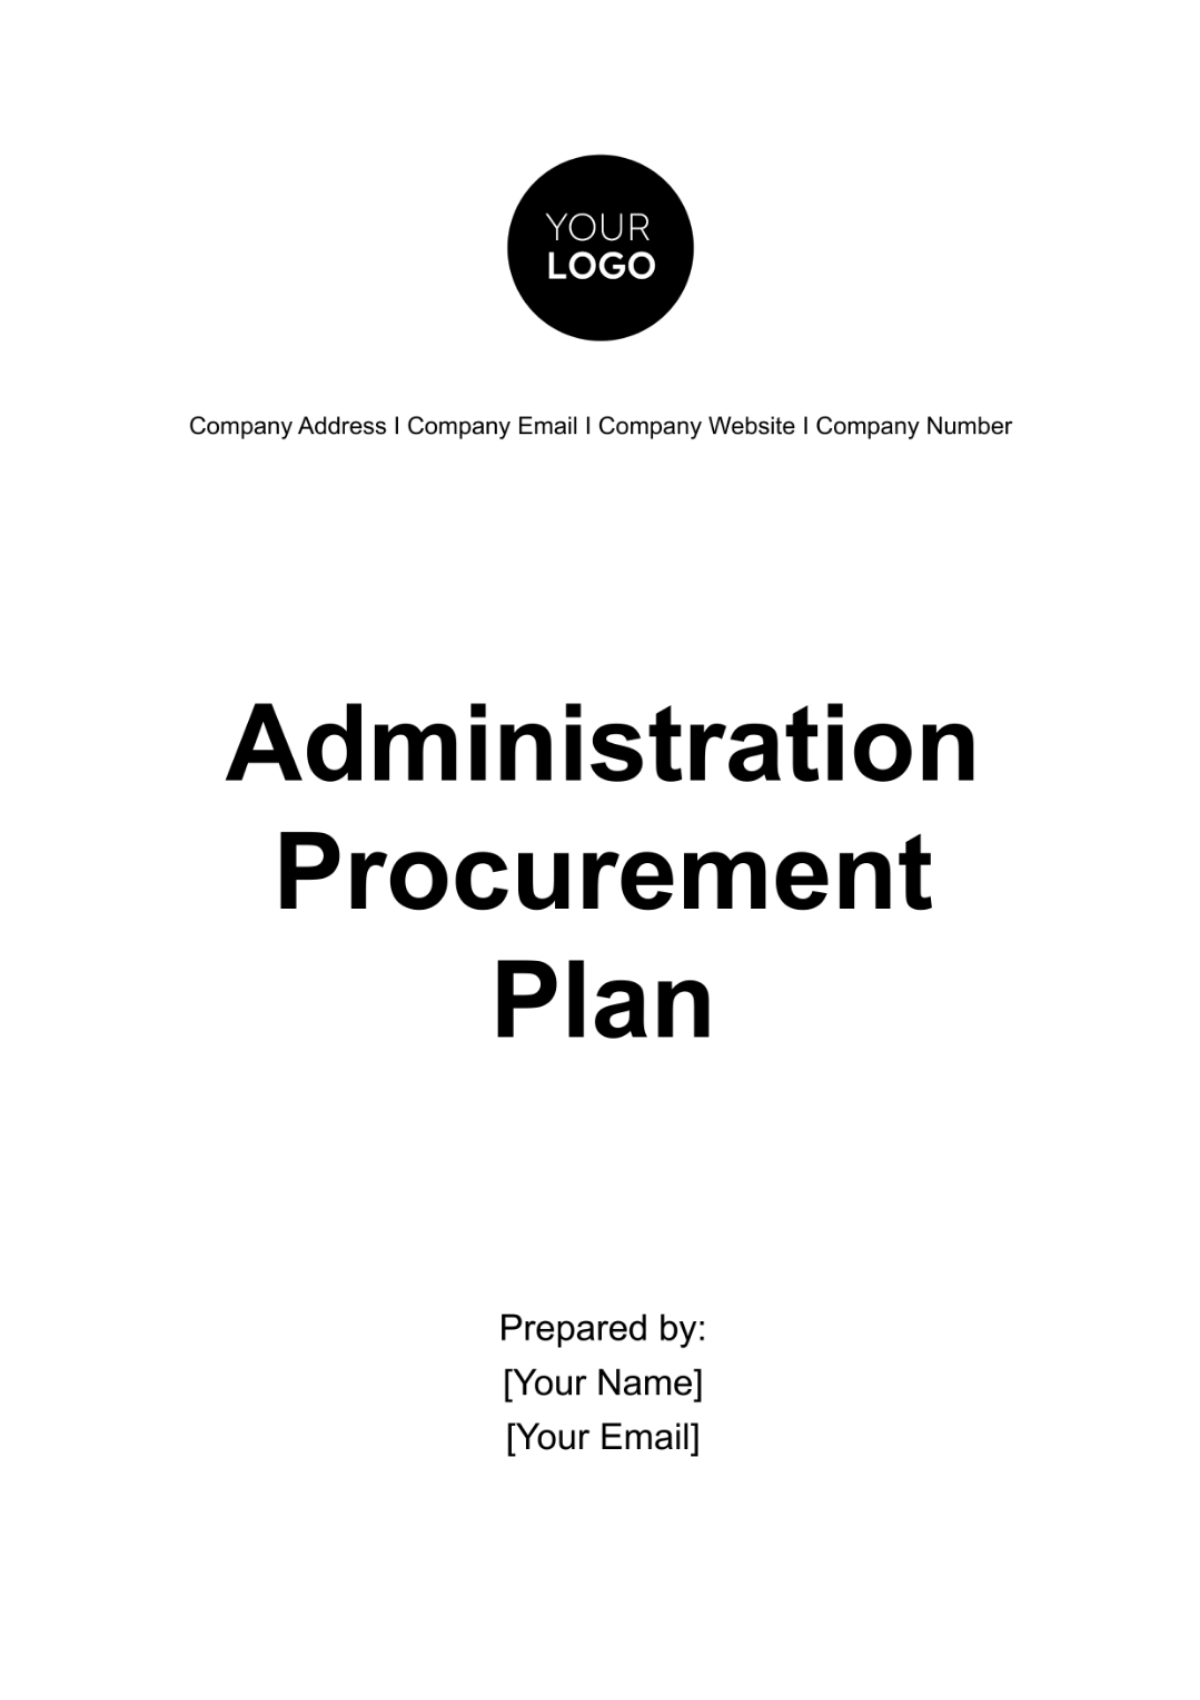 Administration Procurement Plan Template